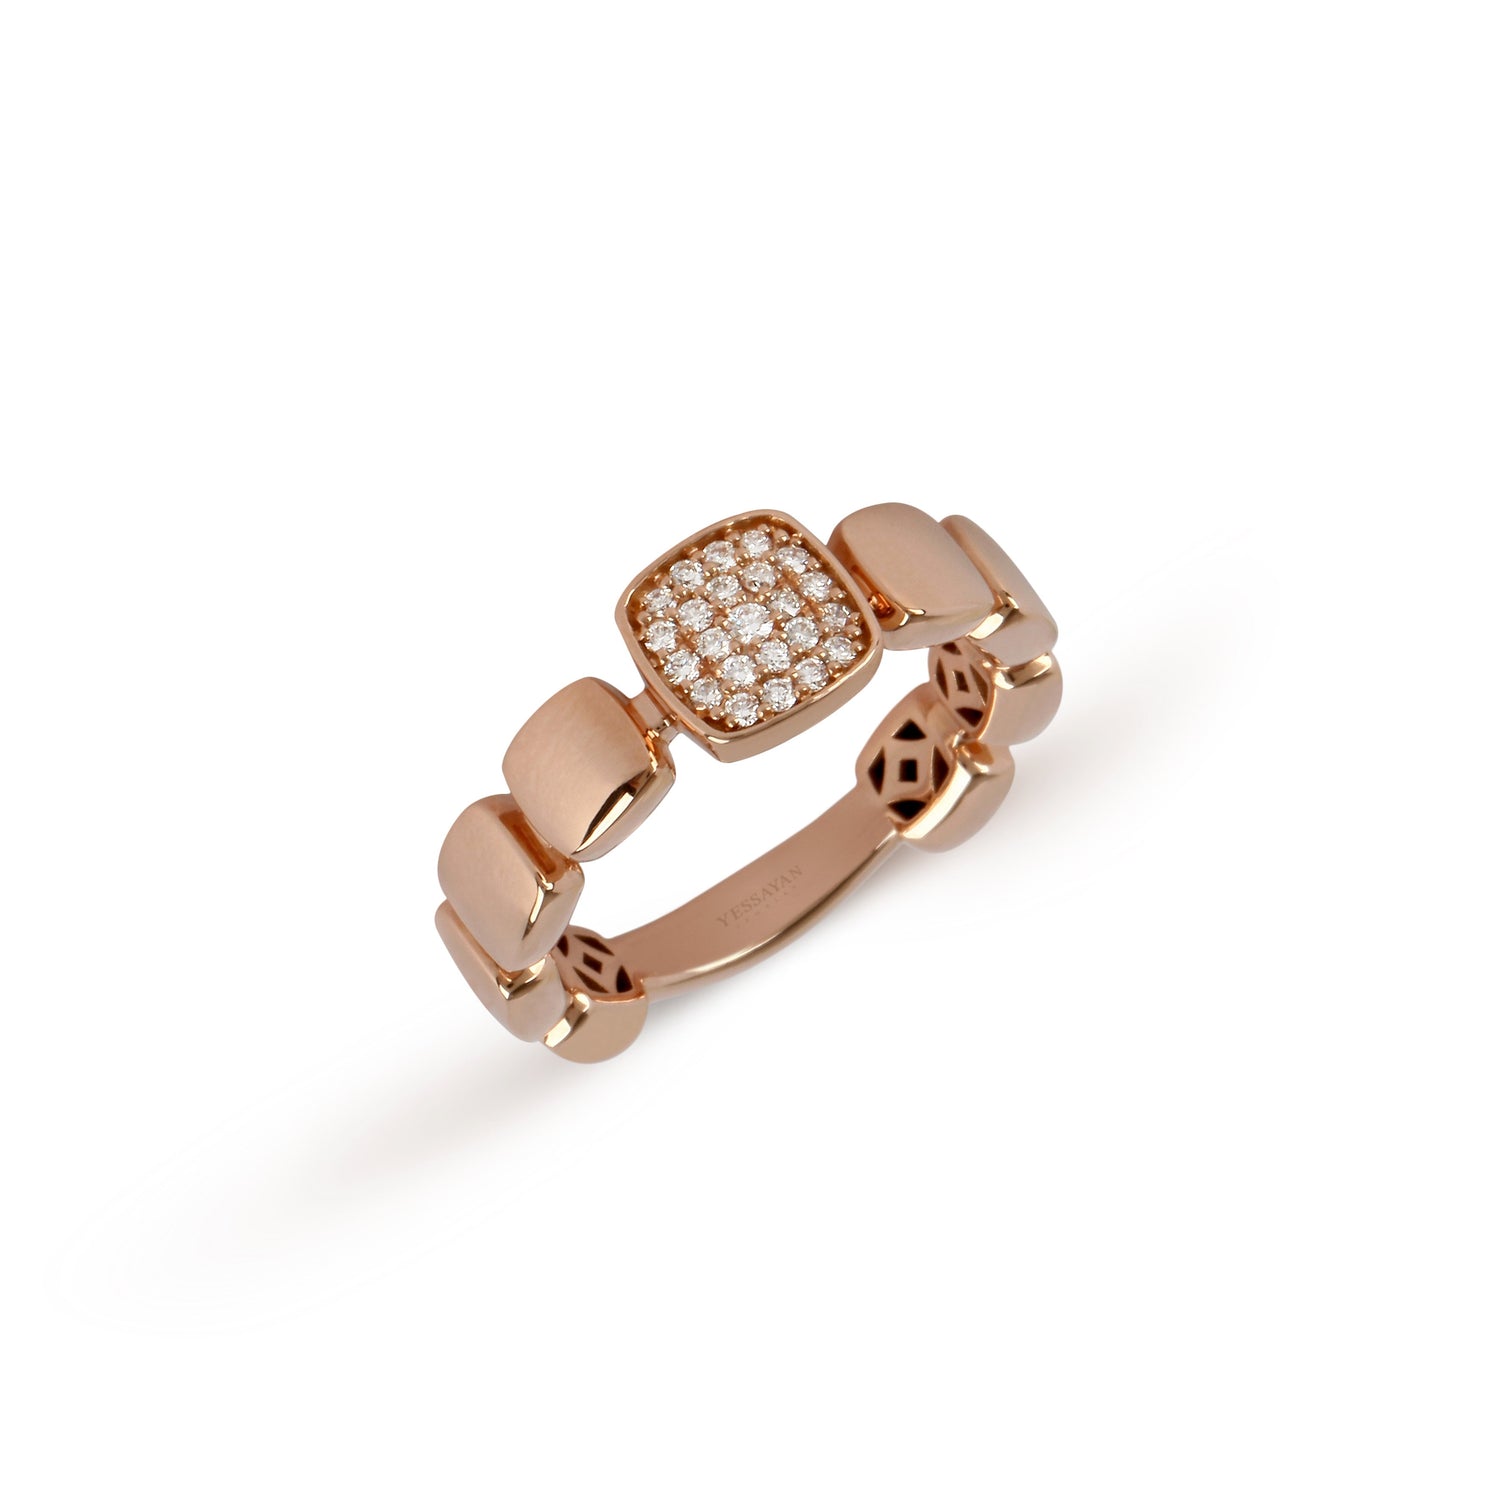 Square Pattern Band Diamond Ring | jewellery store | diamond rings